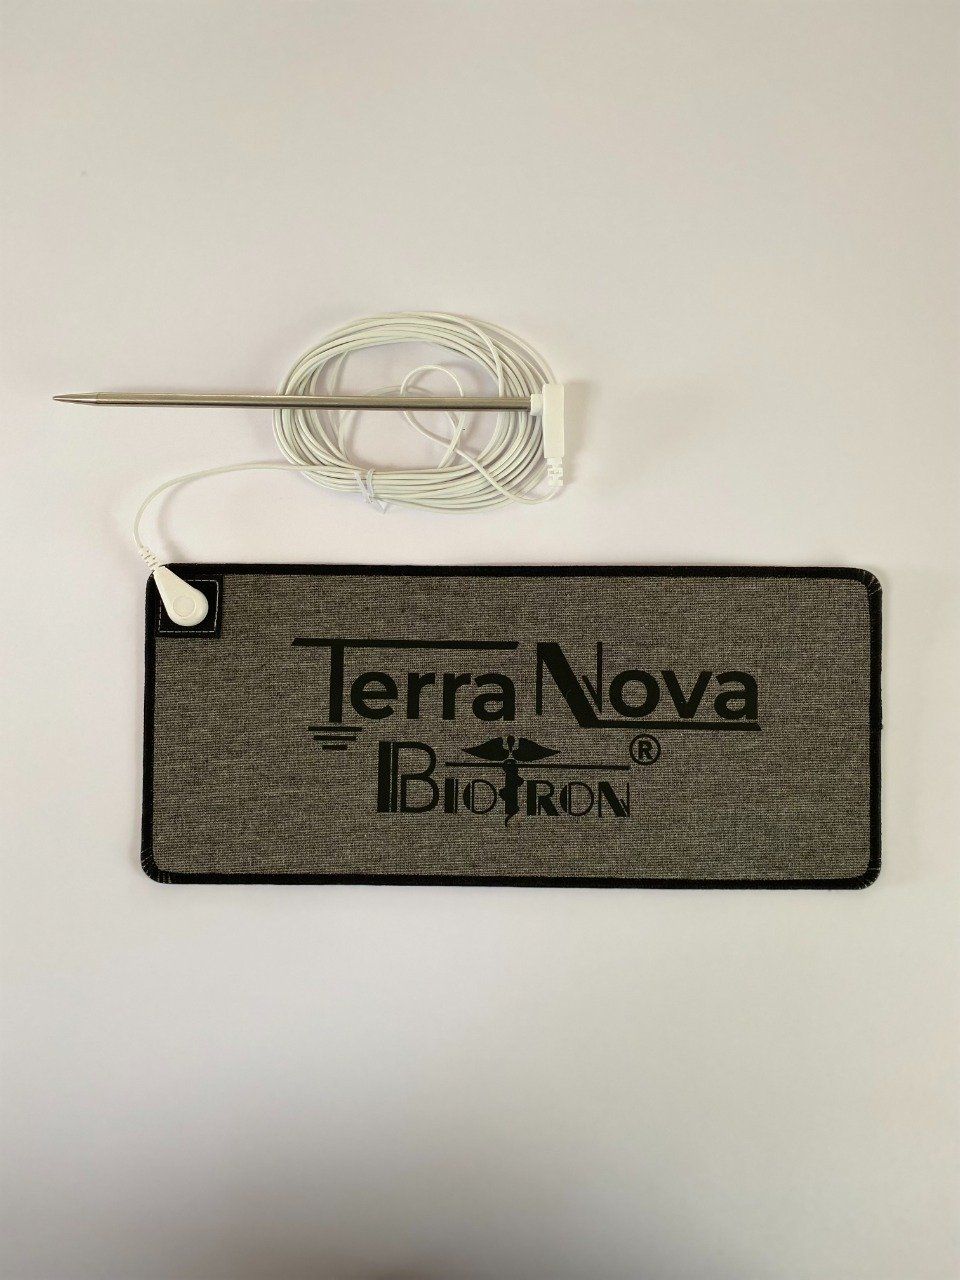 Tapis Souris Biotron Terra Nova - 20 x 30 cm avec câble et prise EU